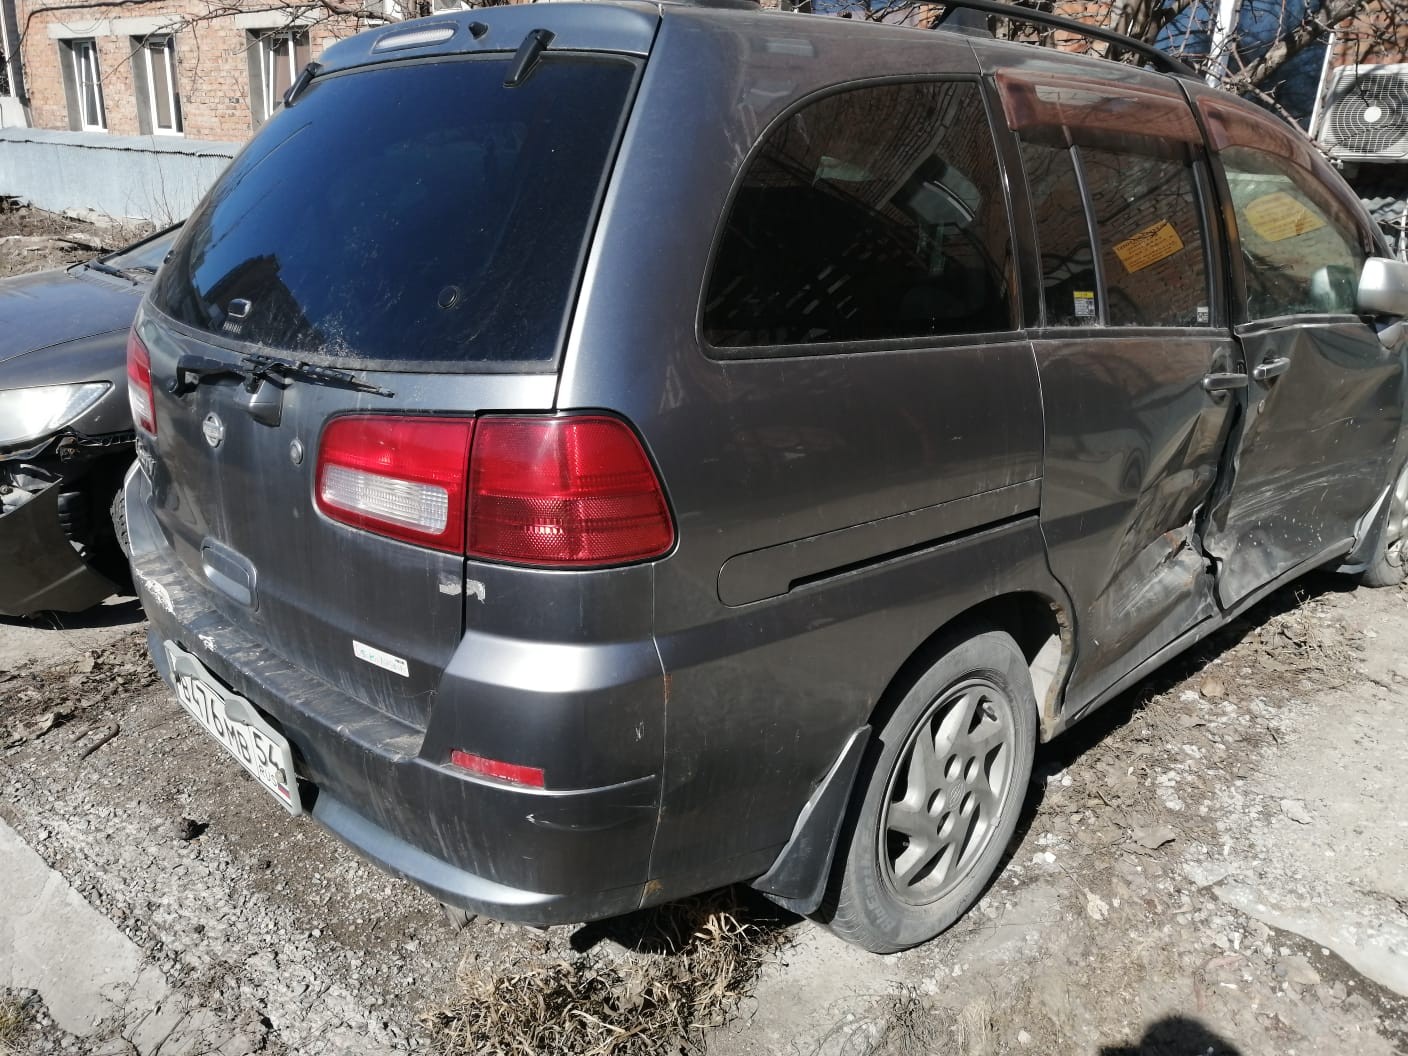 Автомобиль NISSAN LIBERTY, 2000 г.в., г/н В476МВ54, номер кузова: PM12-174868, цвет серый (залог) Те